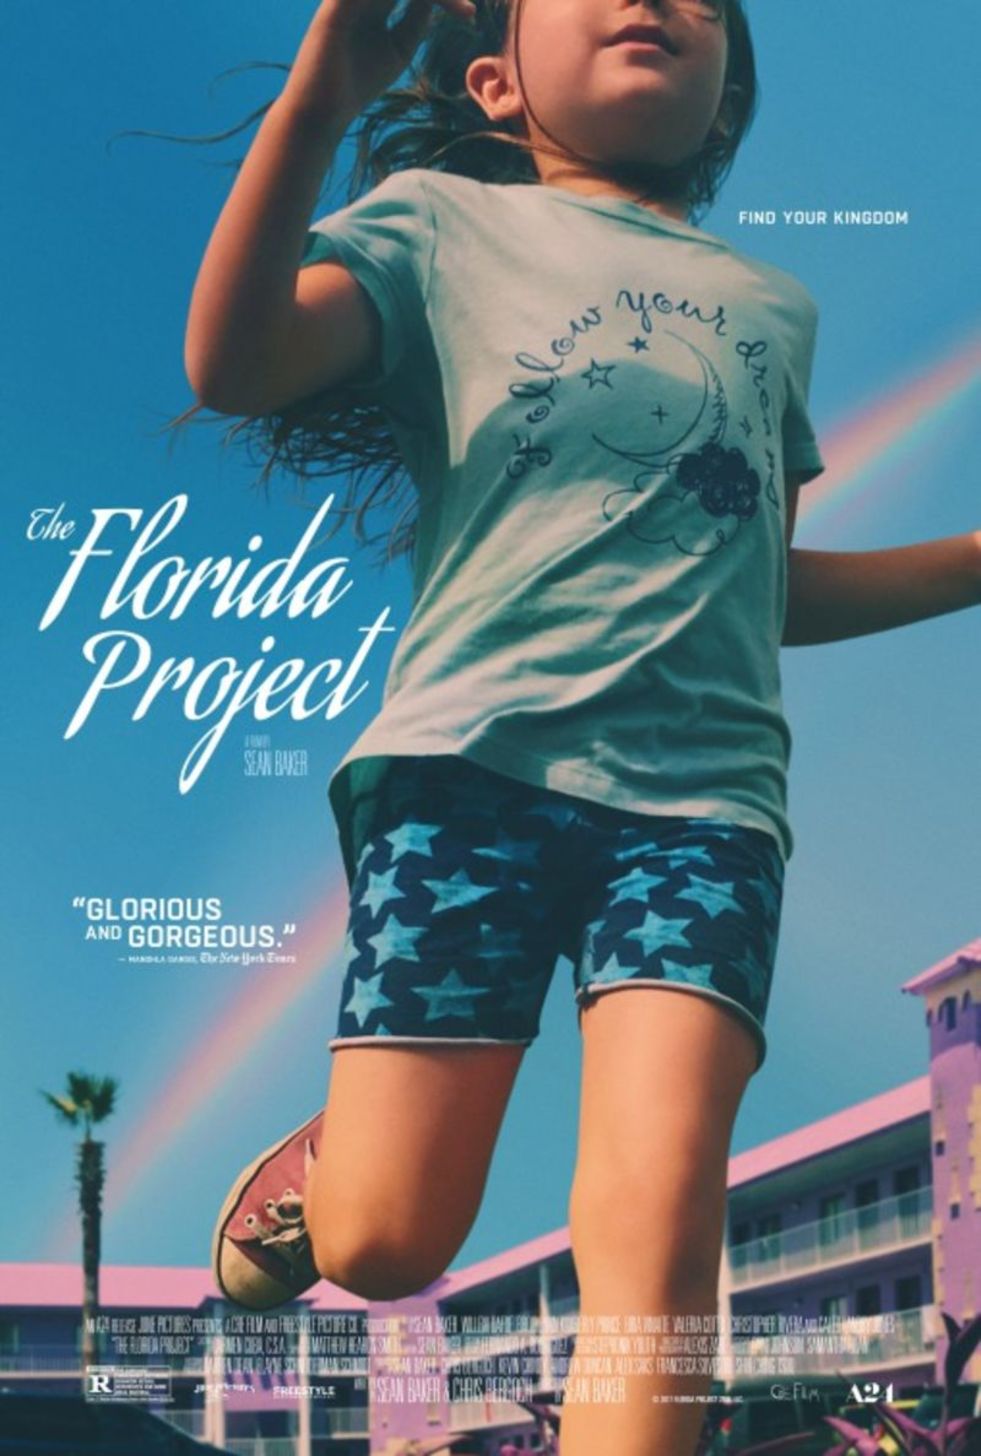 KESKINO: The Florida Project